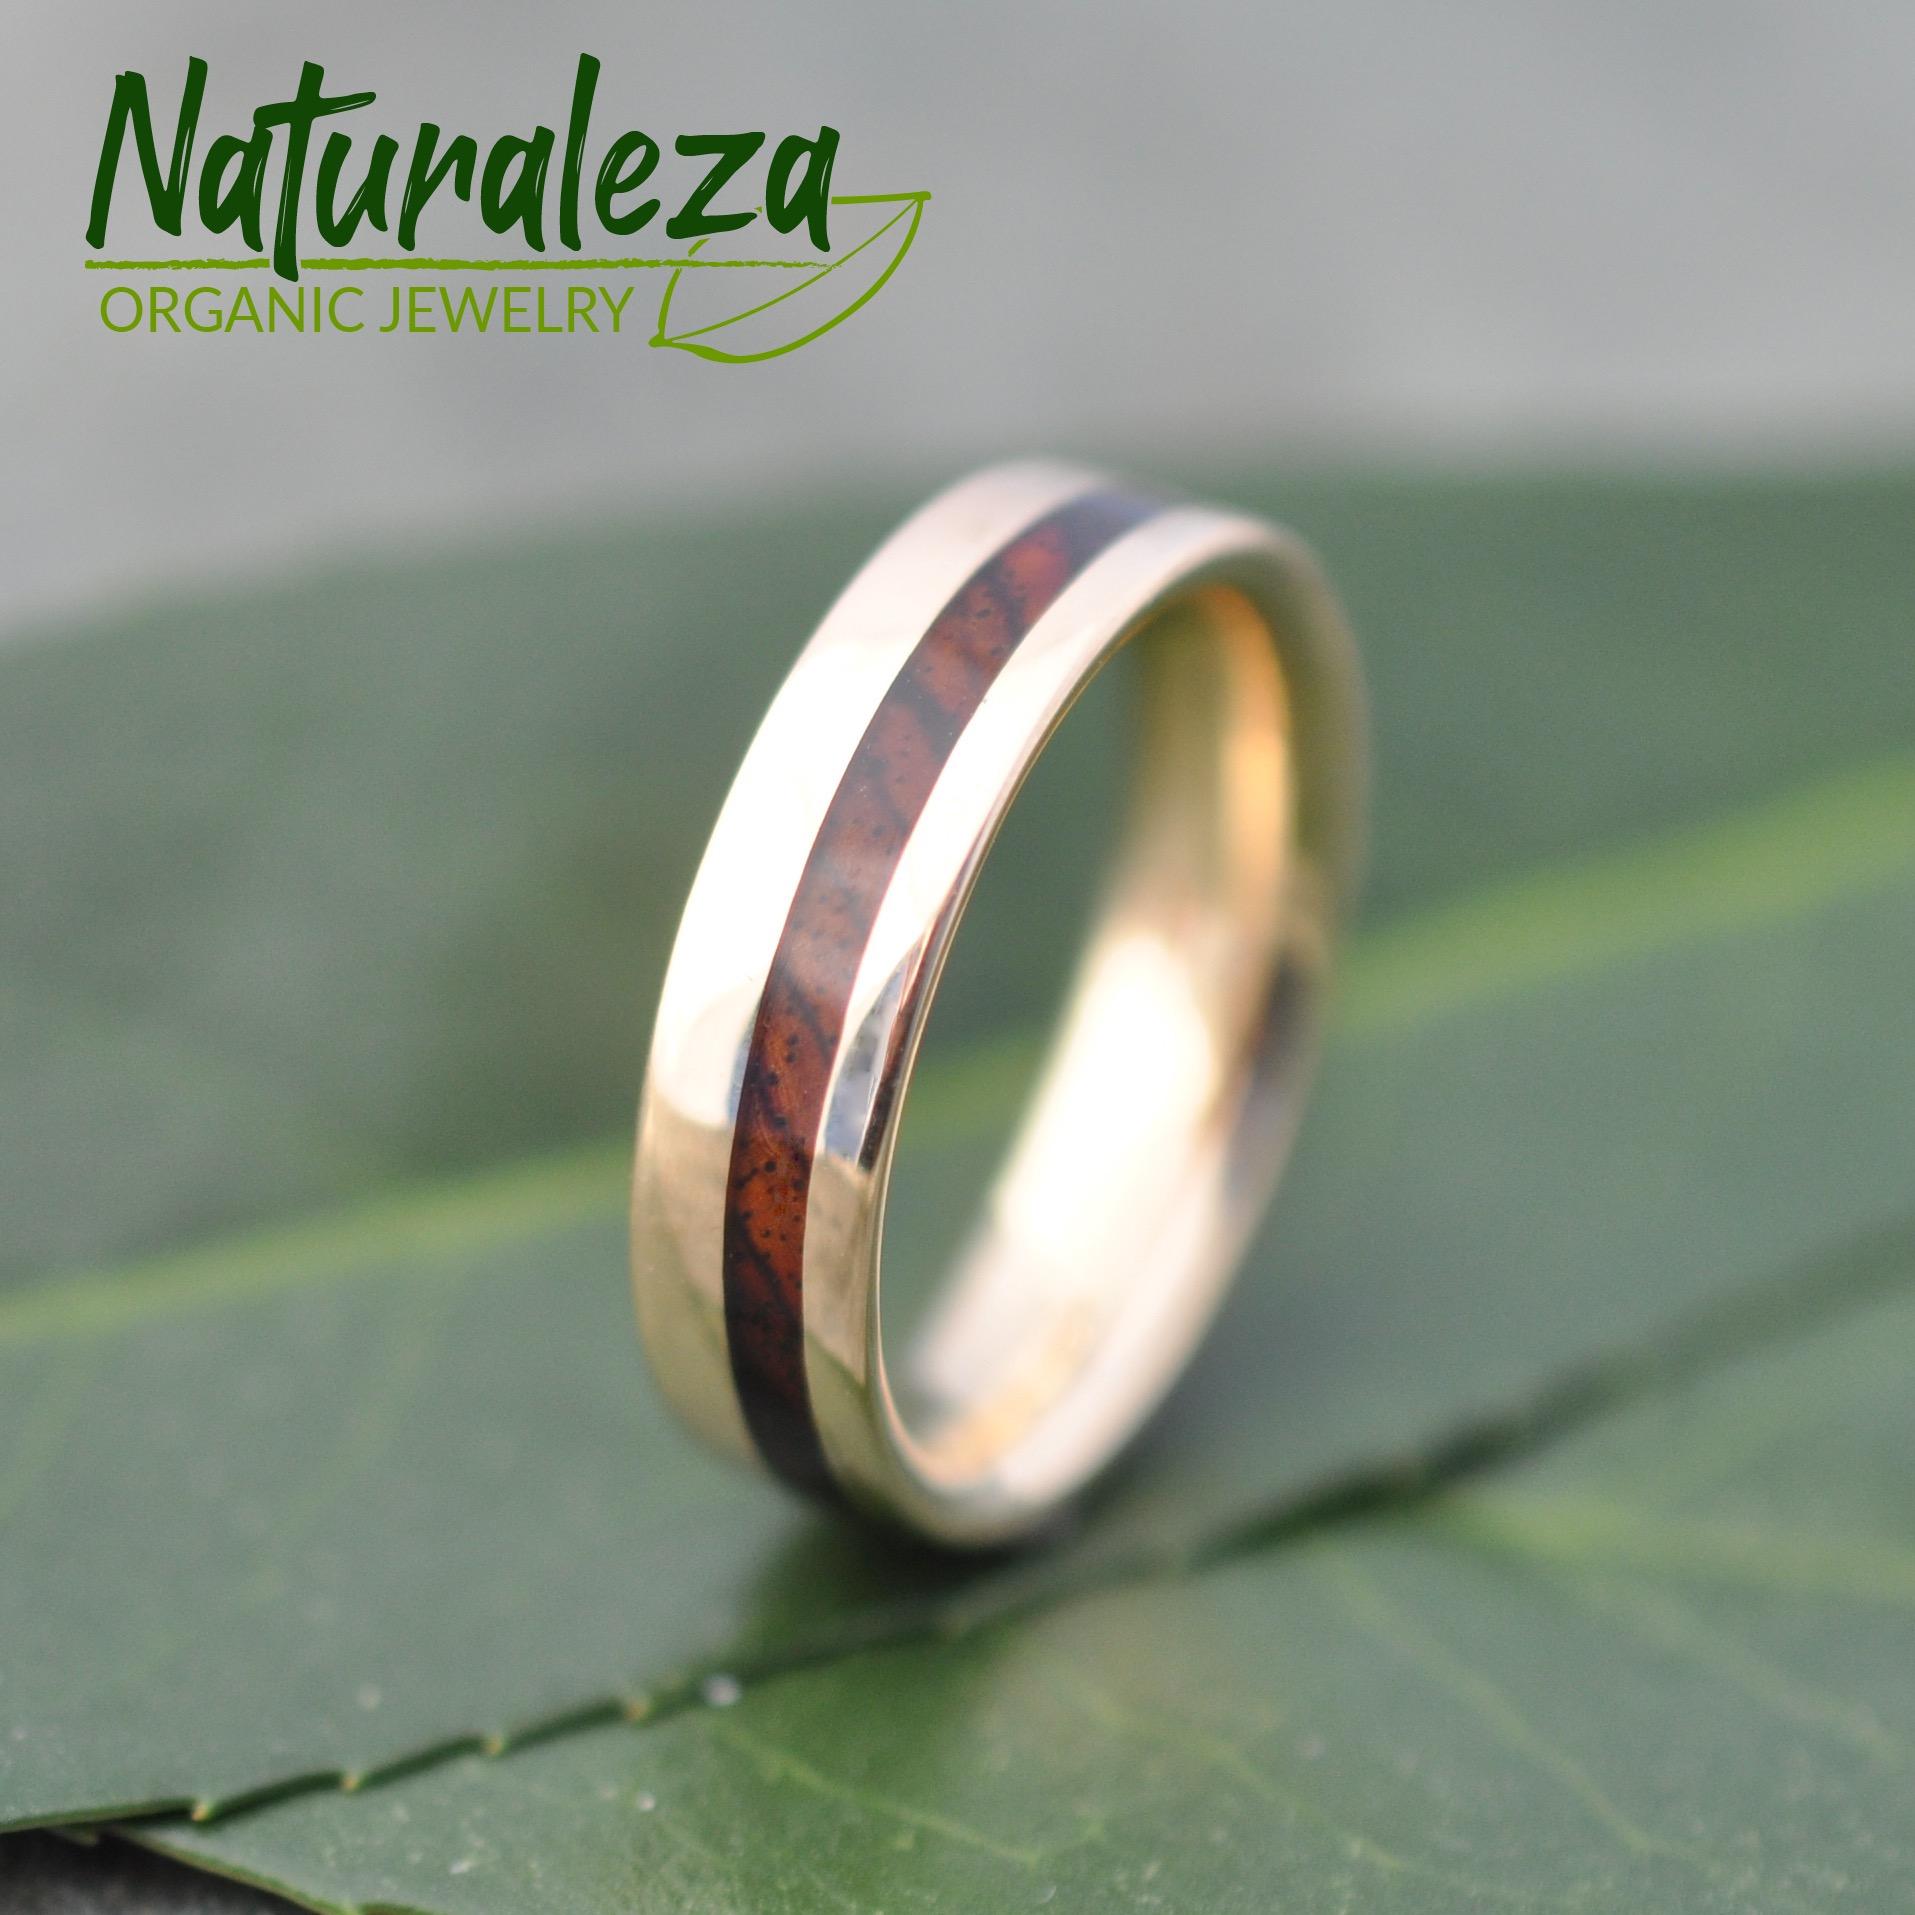 Naturaleza Organic Jewelry & Wood Rings 